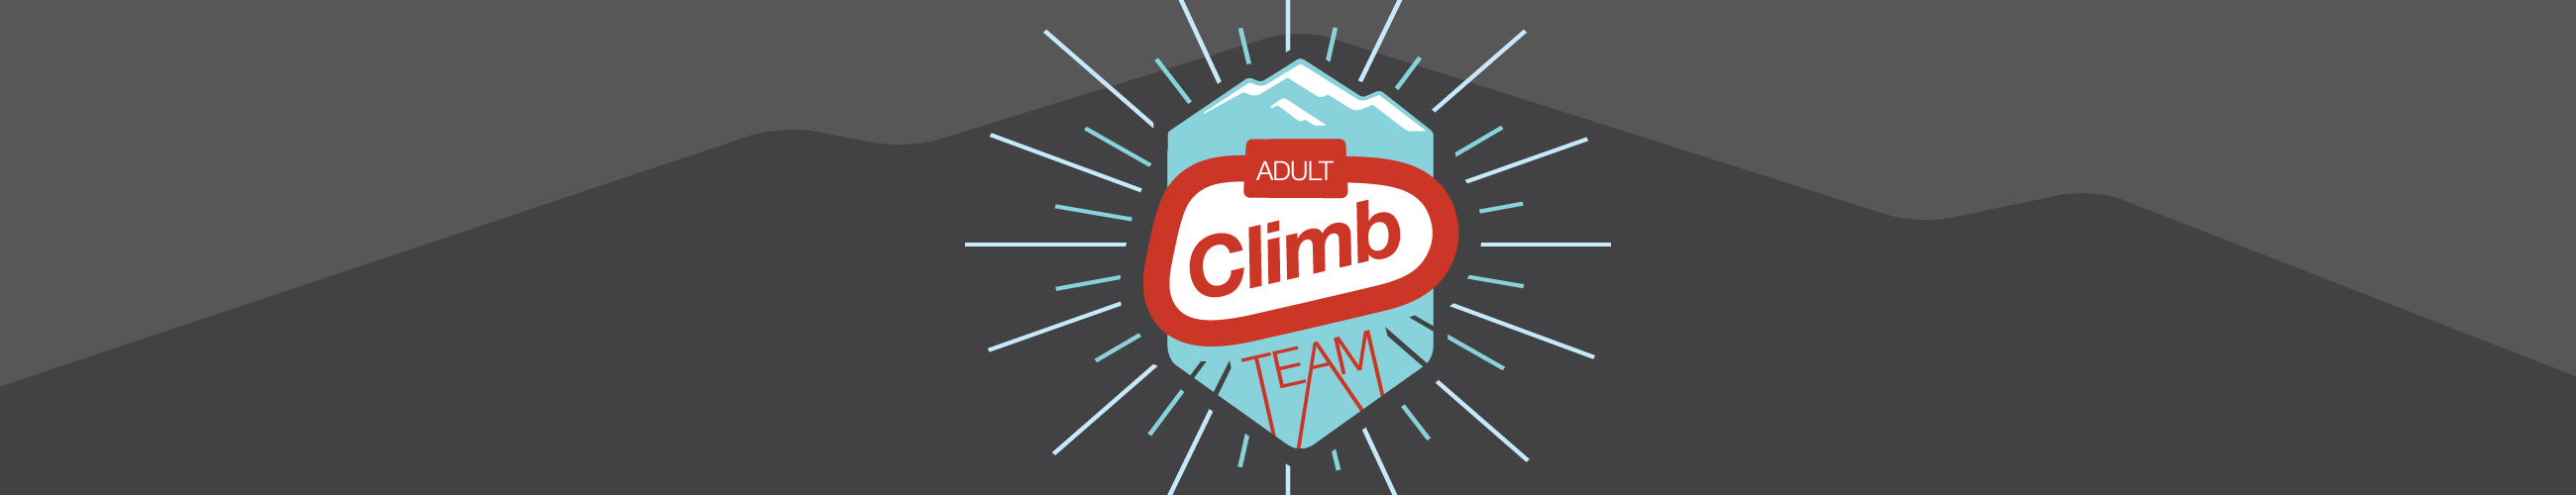 Adult-Climb-Team-Web-Banner